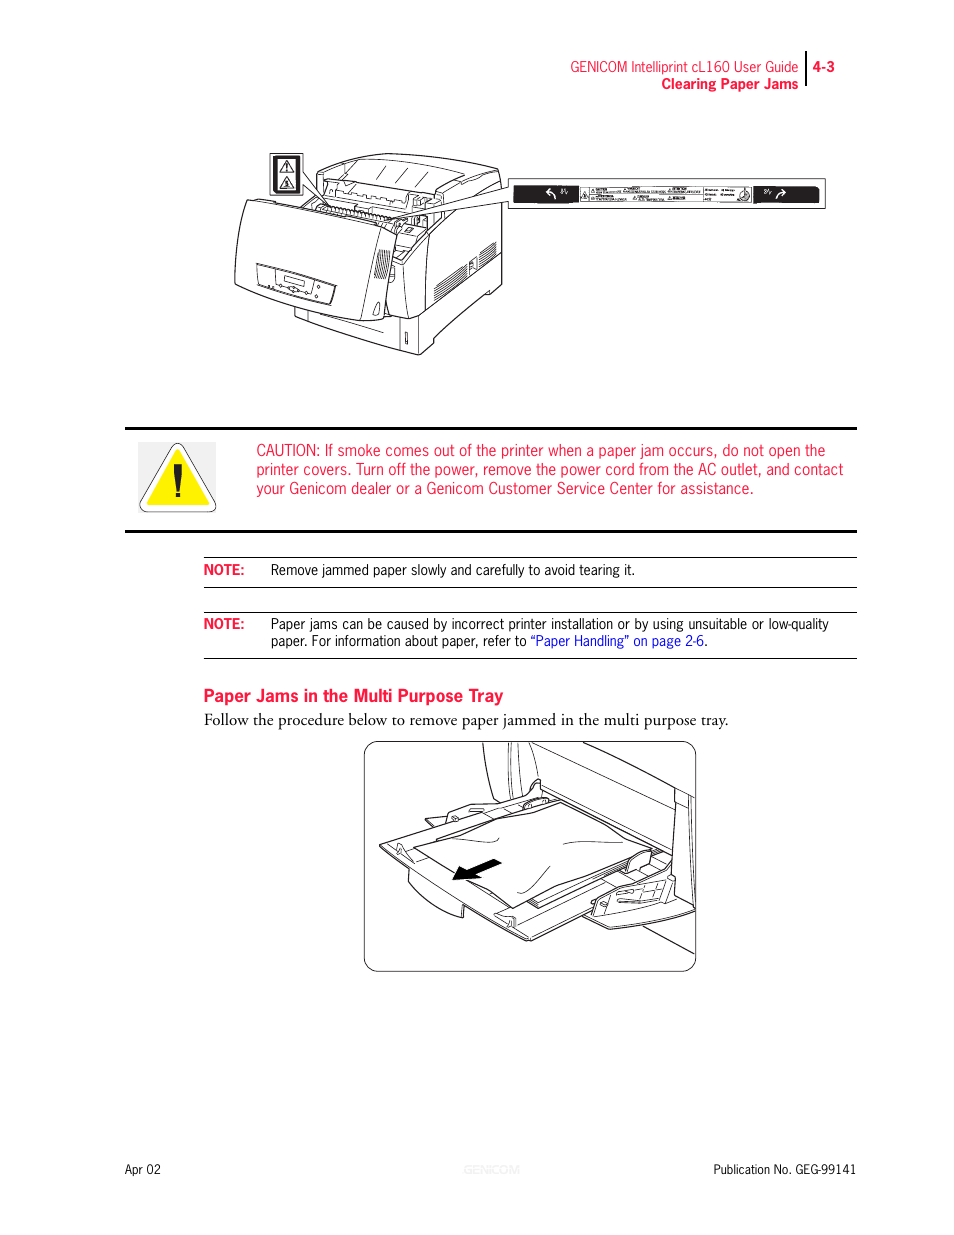 Paper jams in the multi purpose tray 4-3 | Genicom cL160 User Manual | Page 103 / 216